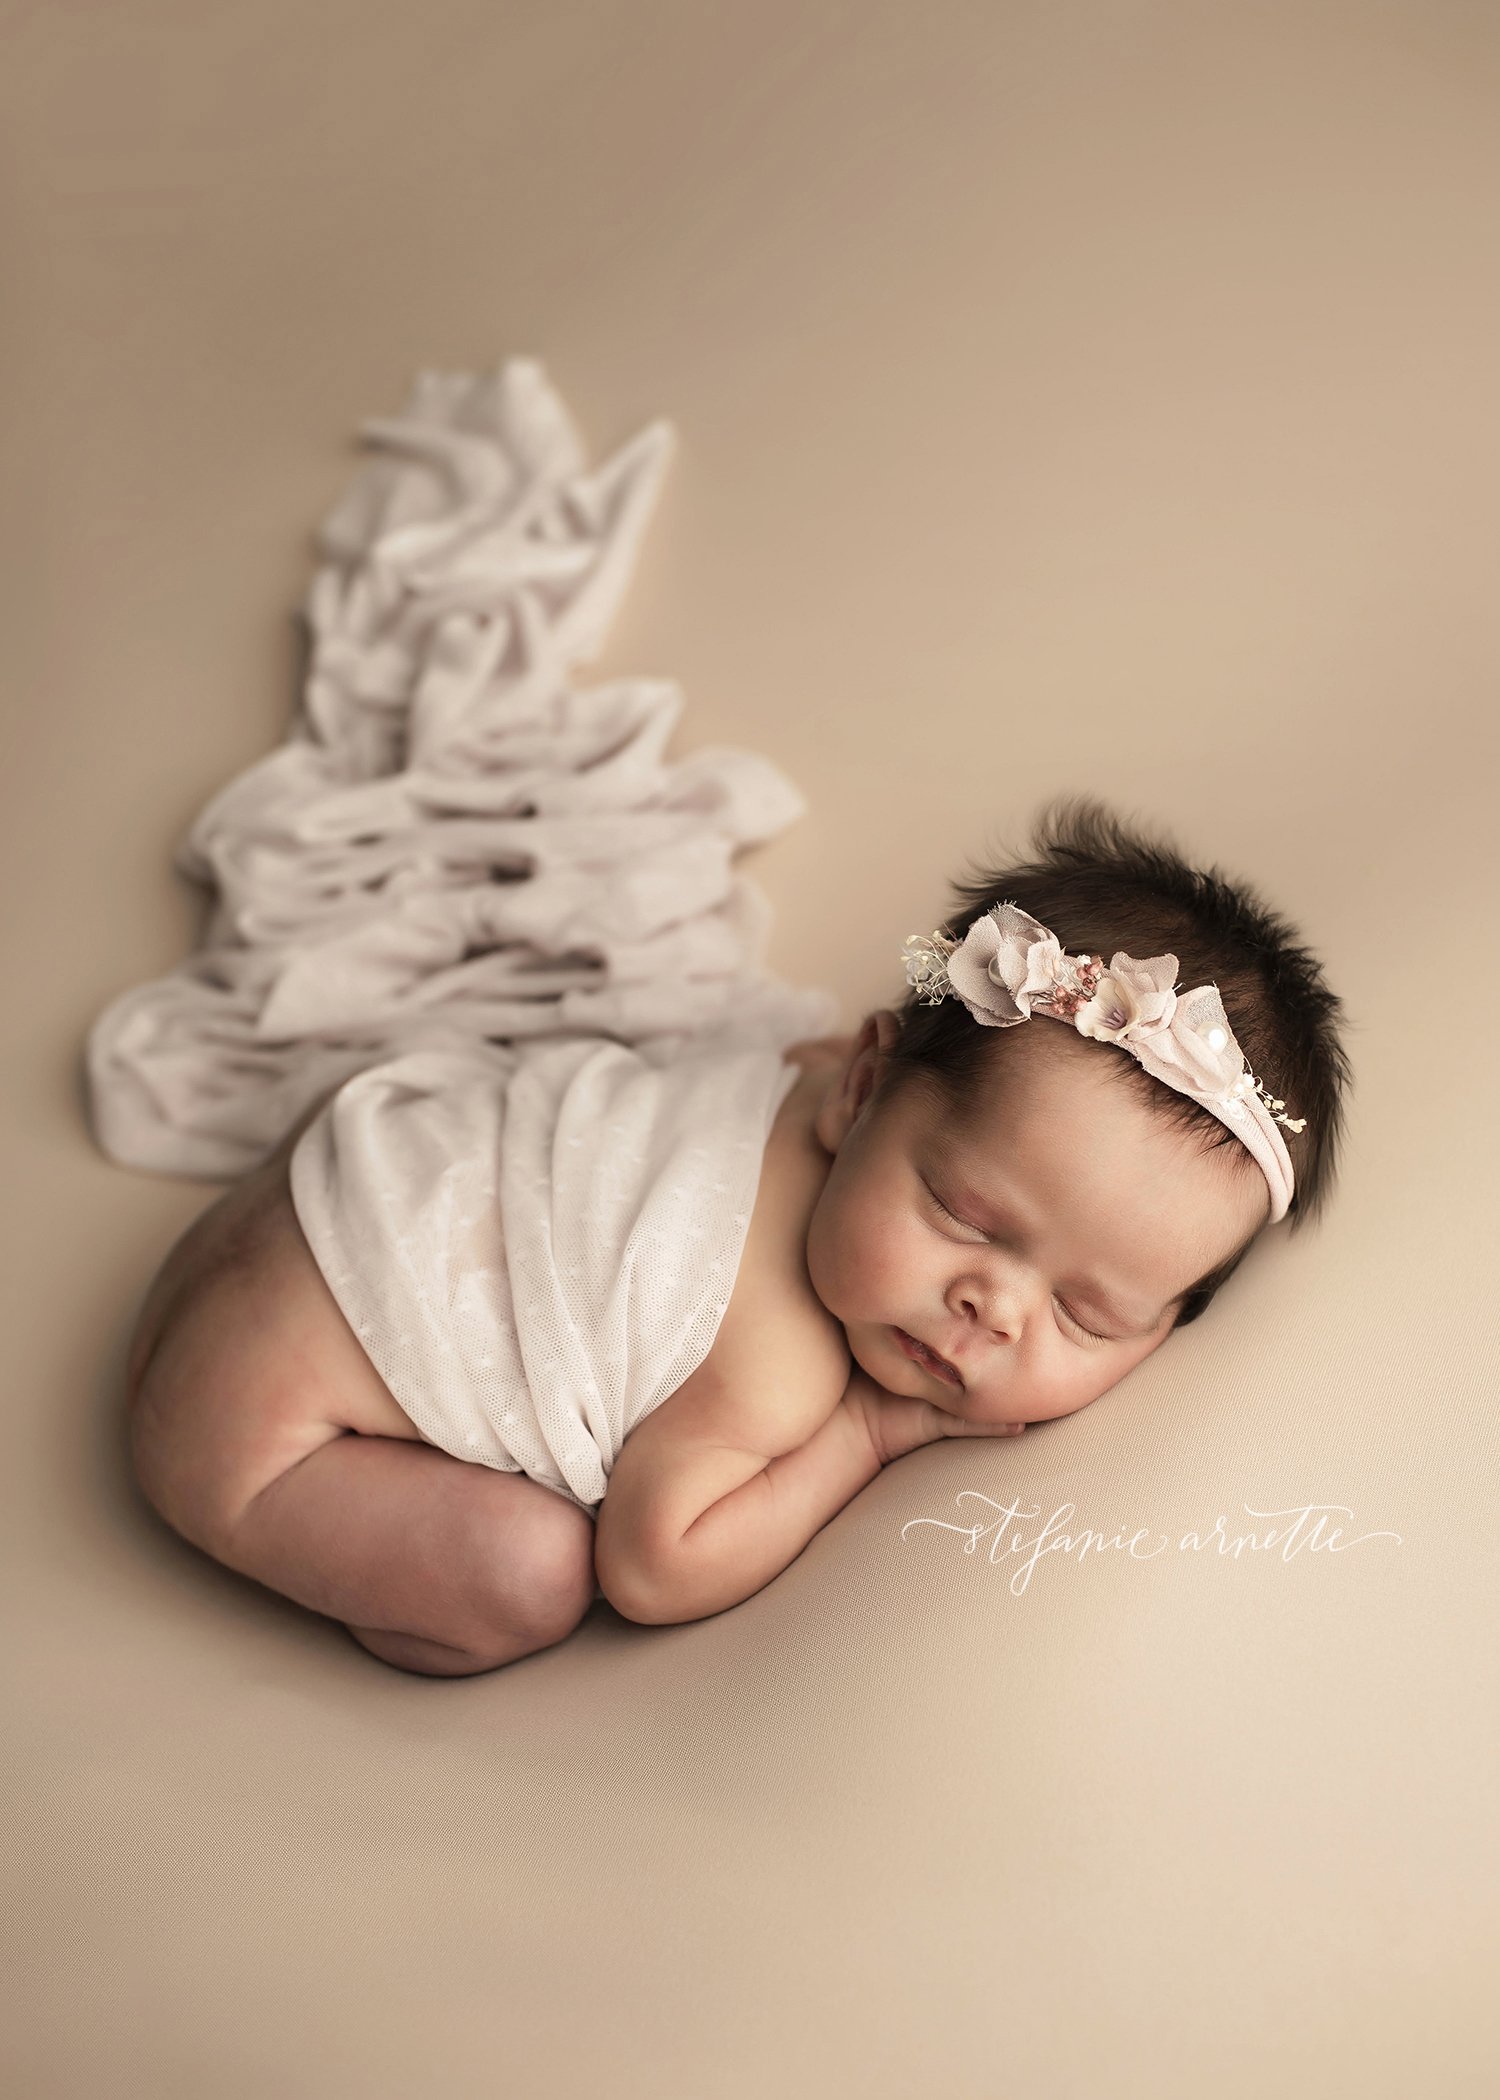 carrollton newborn photographer, baby portraits carrollton ga, baby photography packages